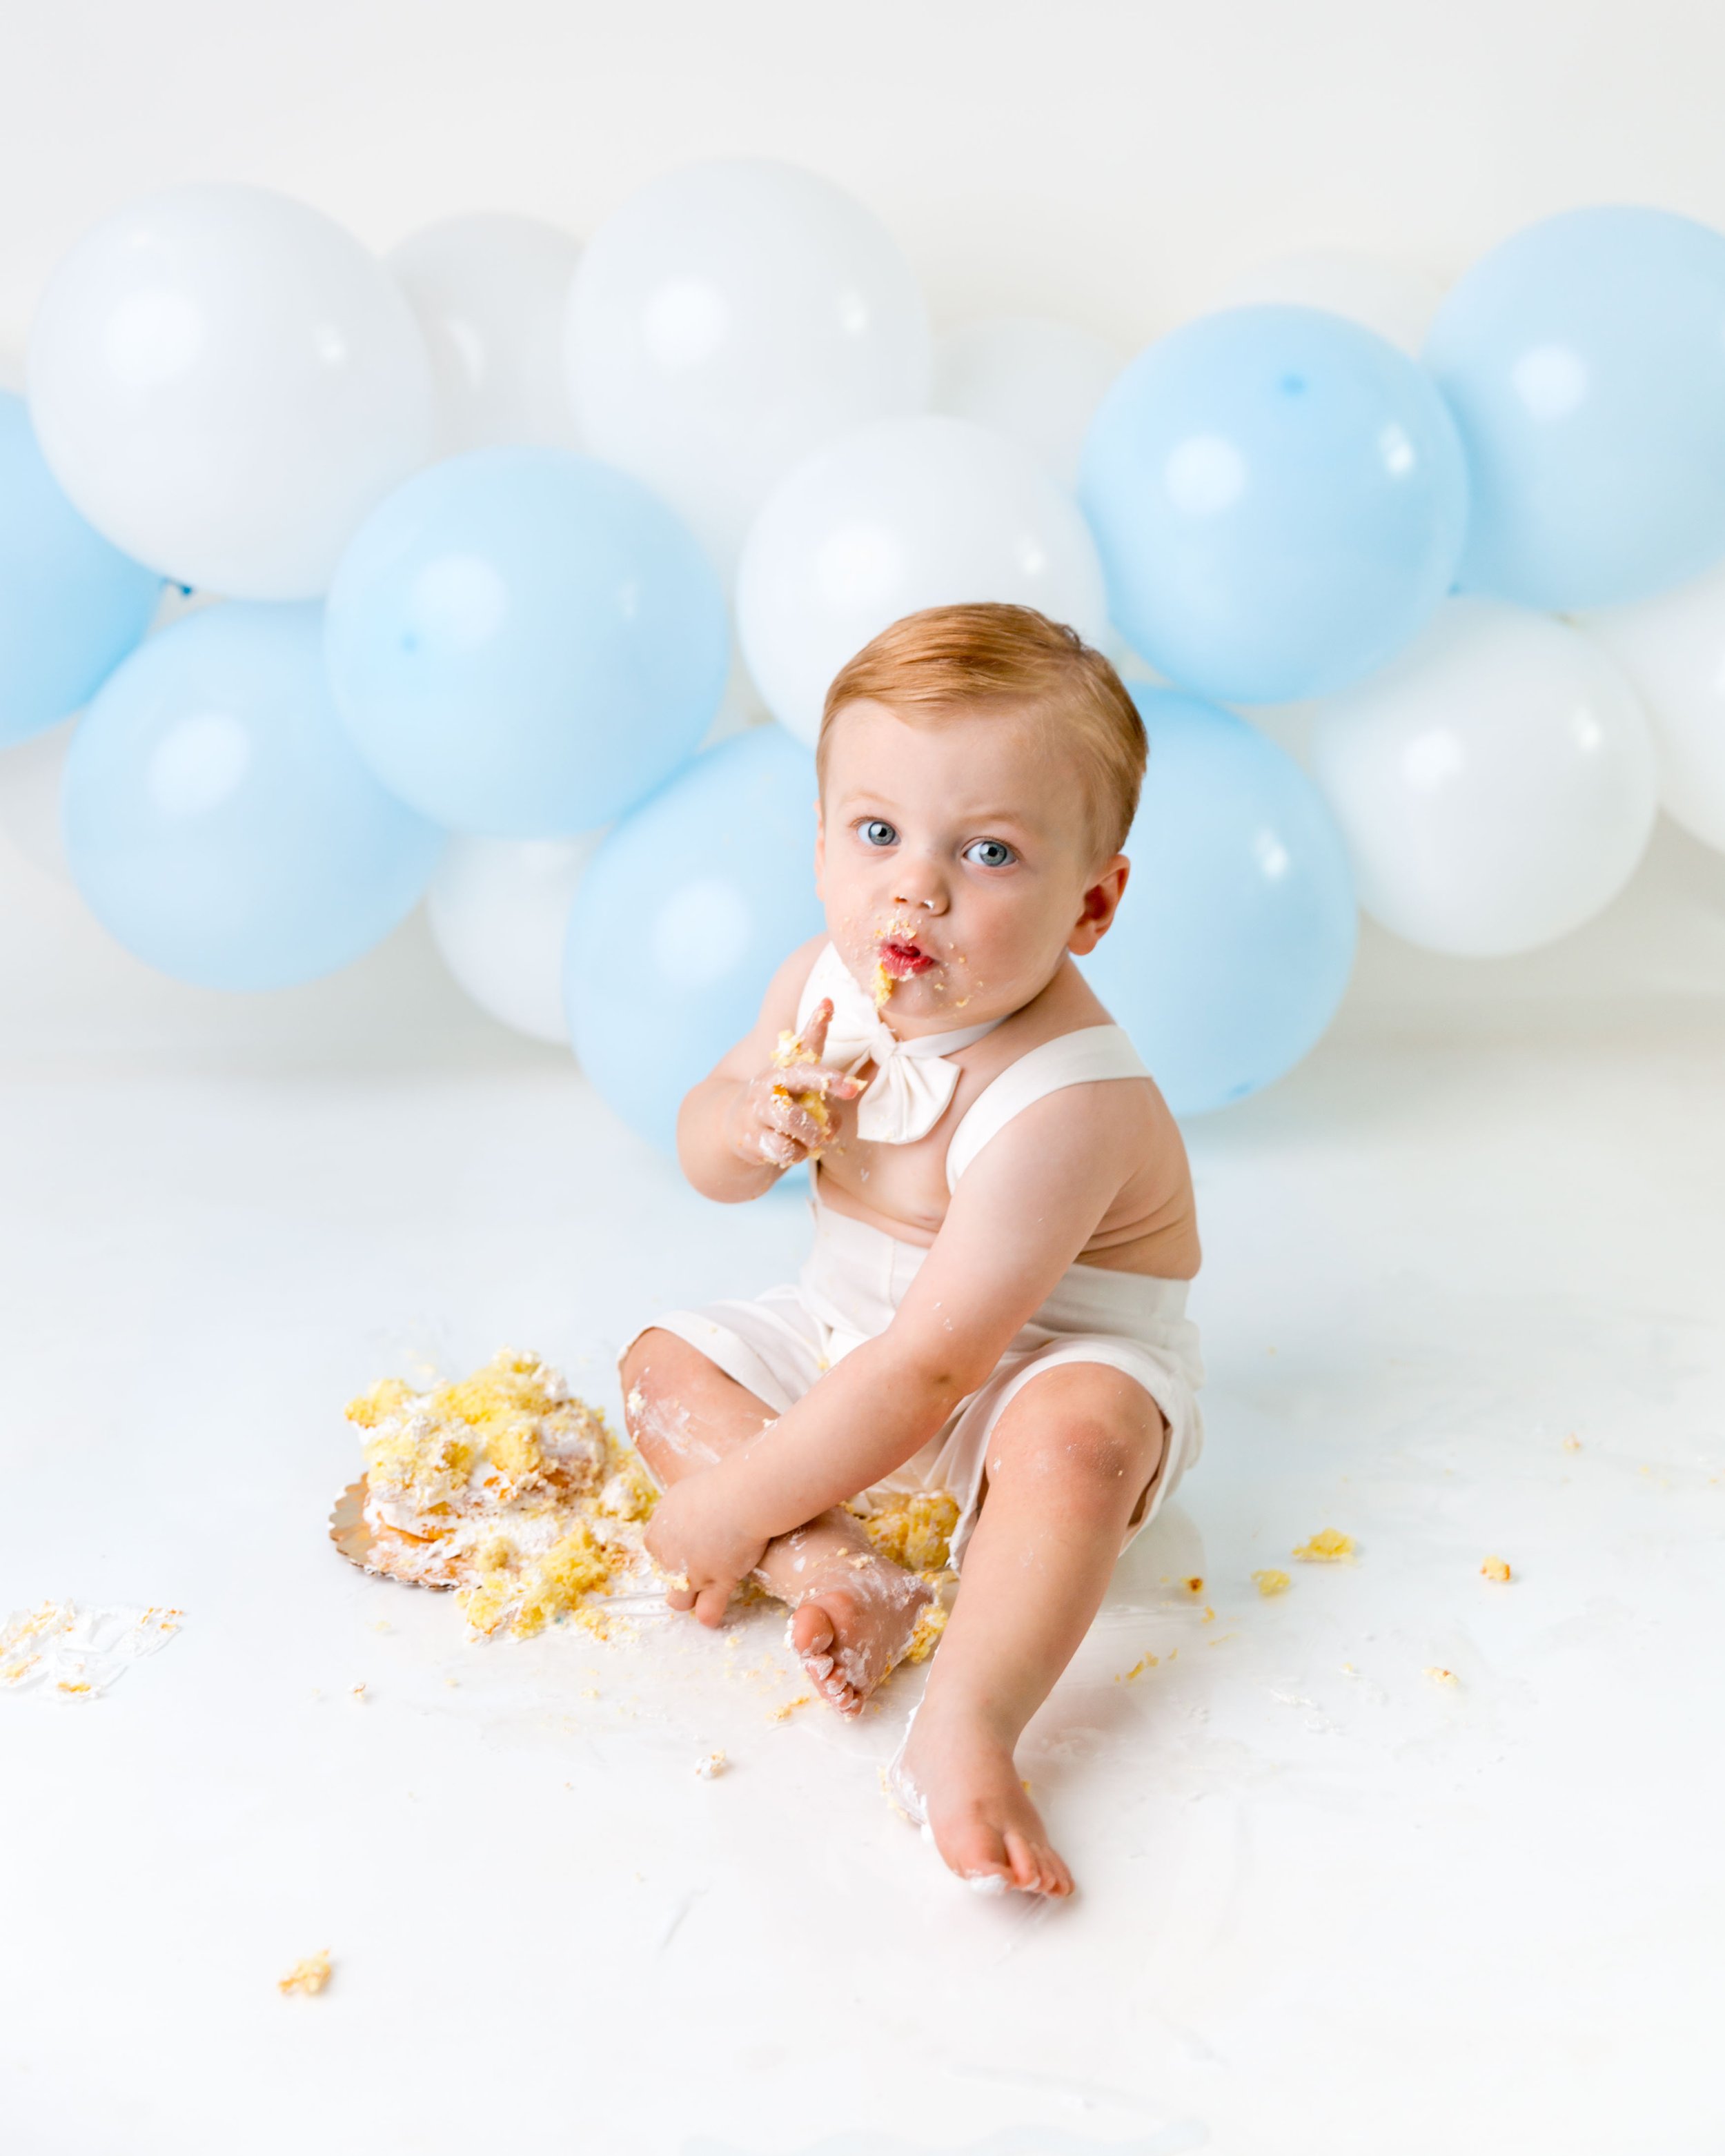 cake-smash-photos-first-birthday-images-milestone-photography-newborn-family-spokane-washington-10.jpg